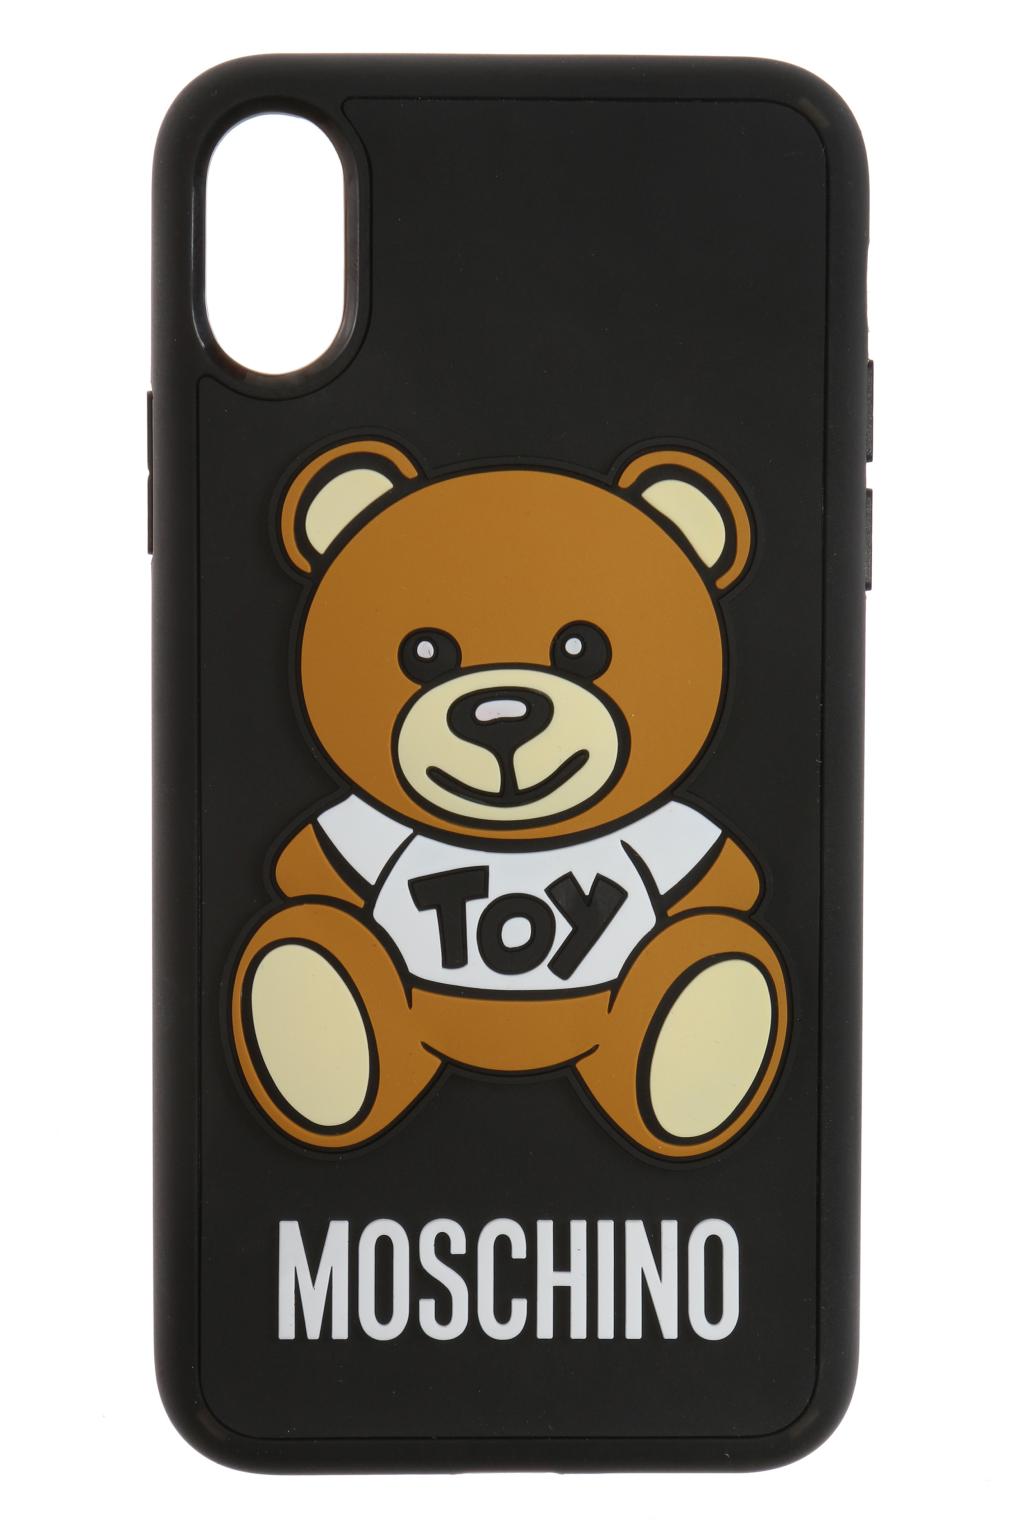 Moschino iPhone X case | Women's Accessories |